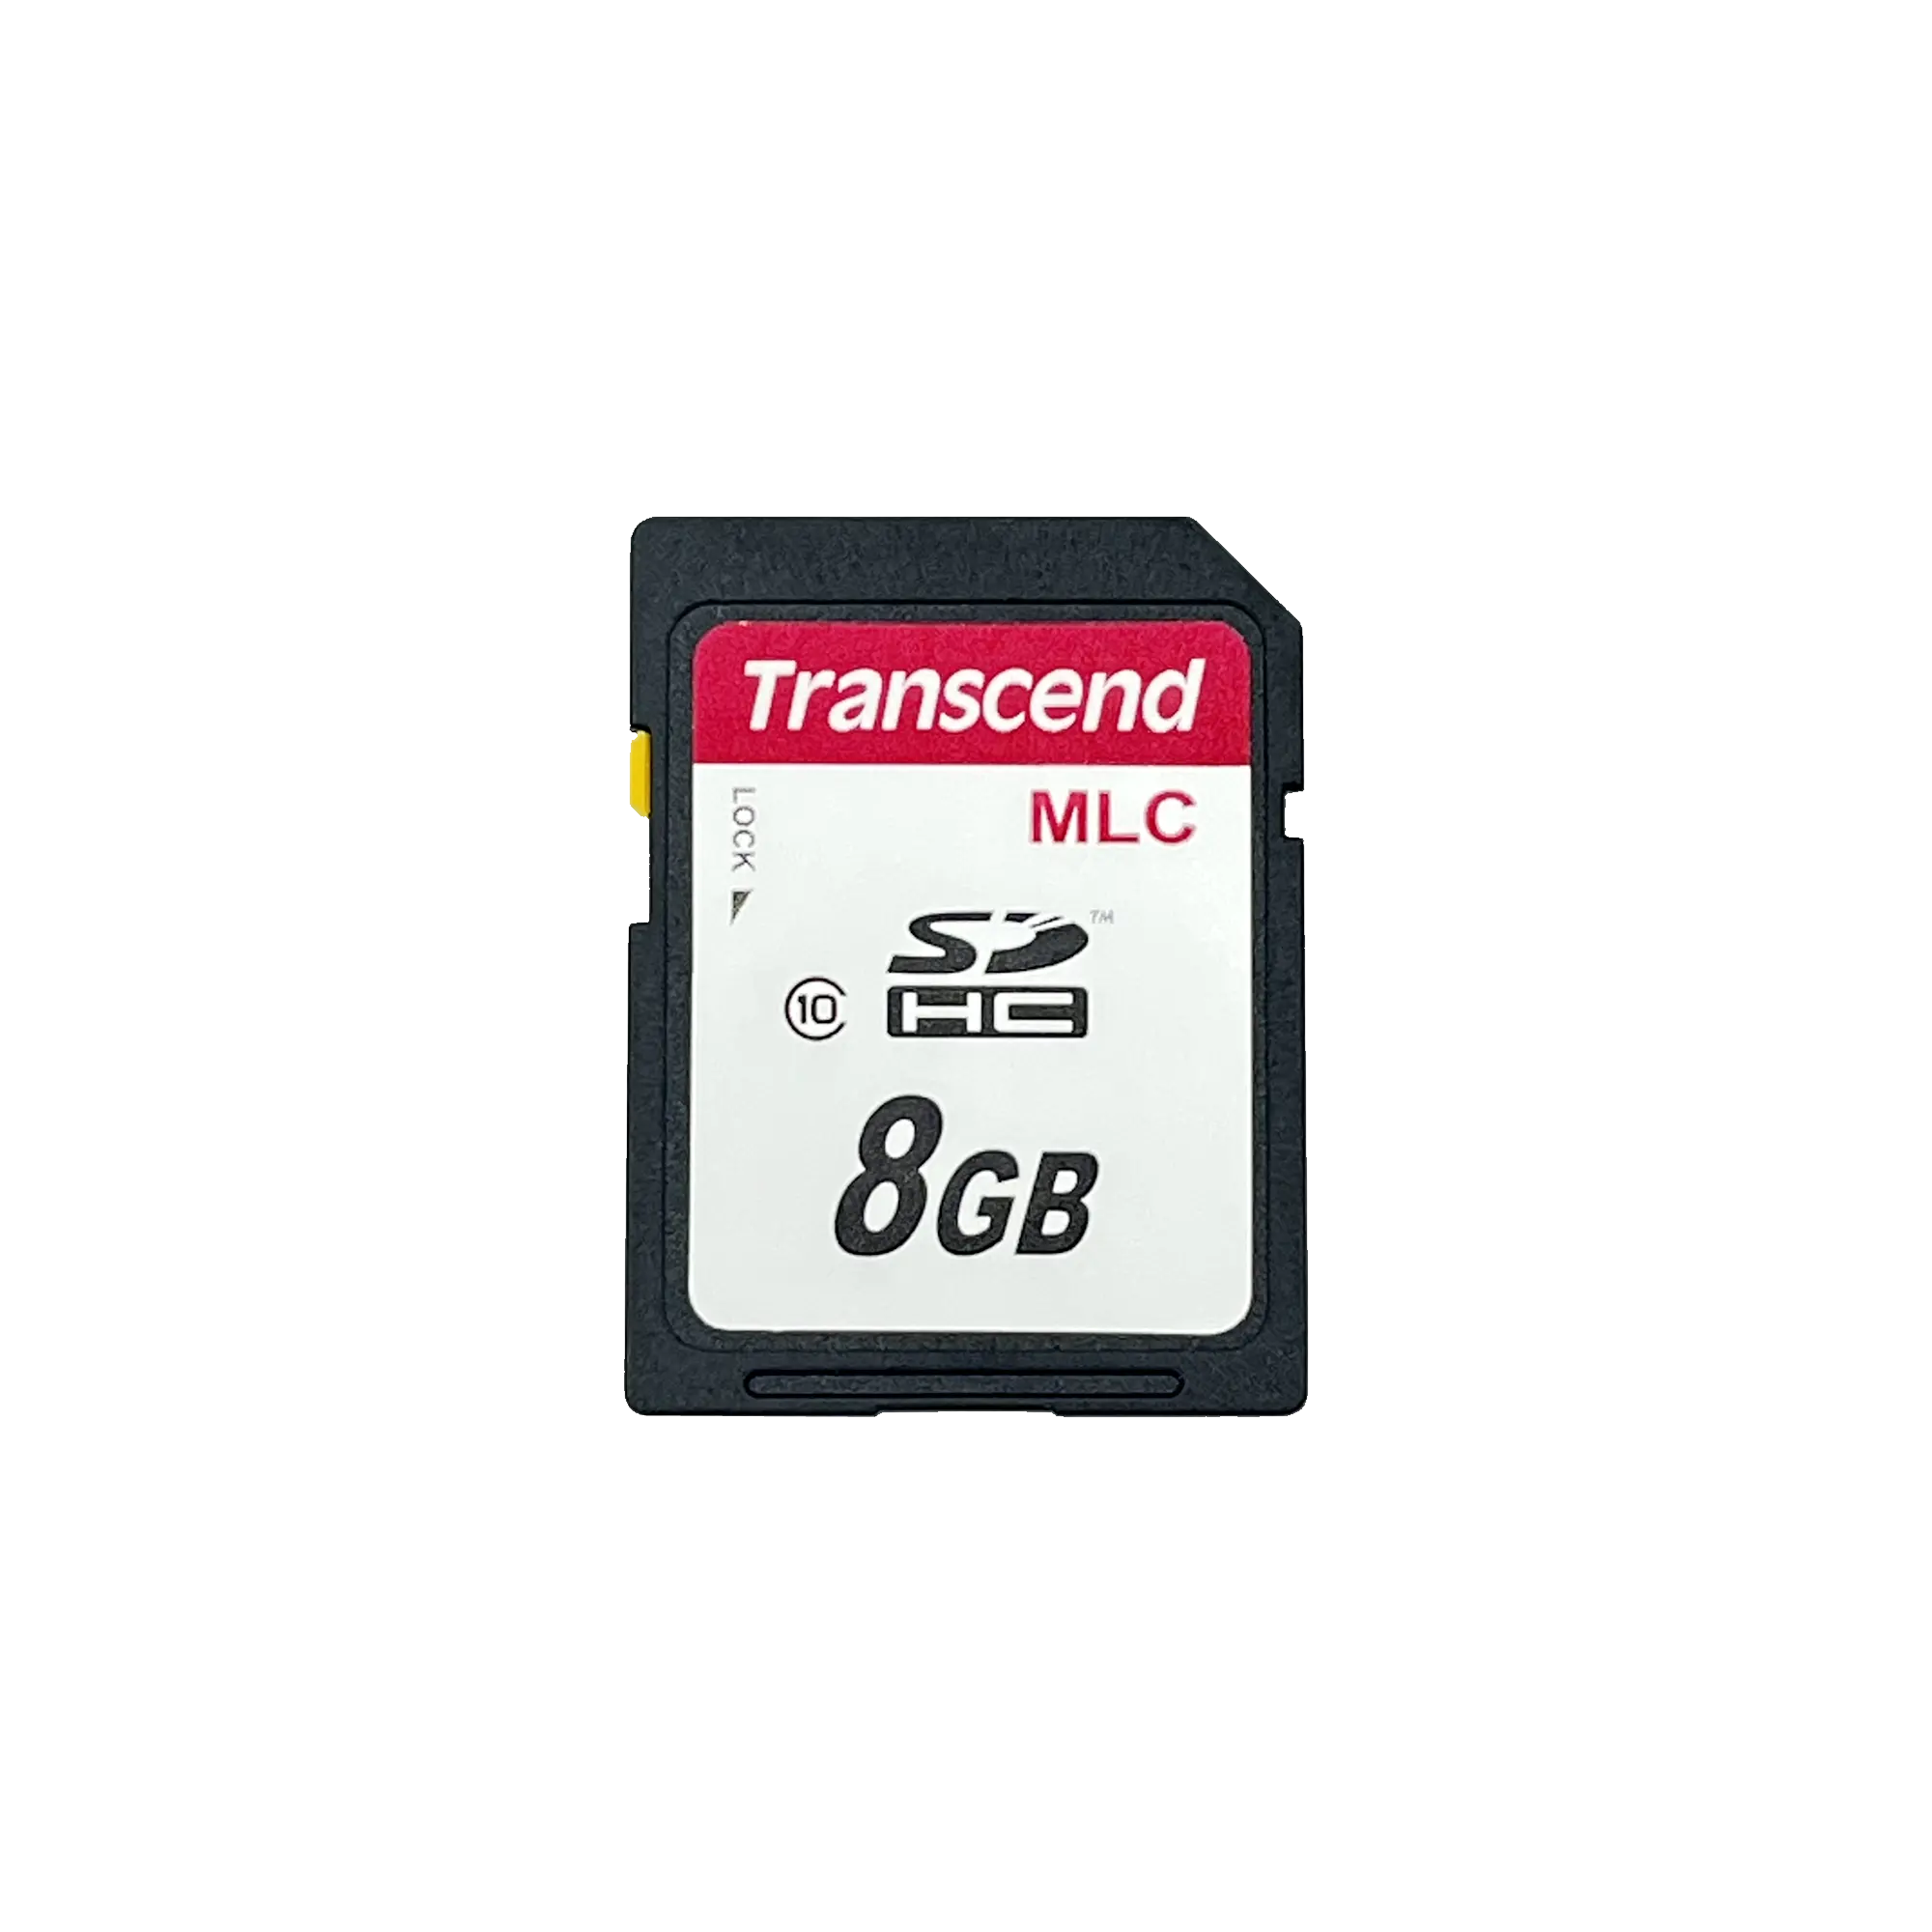 SD-Speicher karte MLC 8GB Industrial Secure Digital TS (SD)-Karte für Transcend-Handheld-Gerät POS-Infrarot kamera